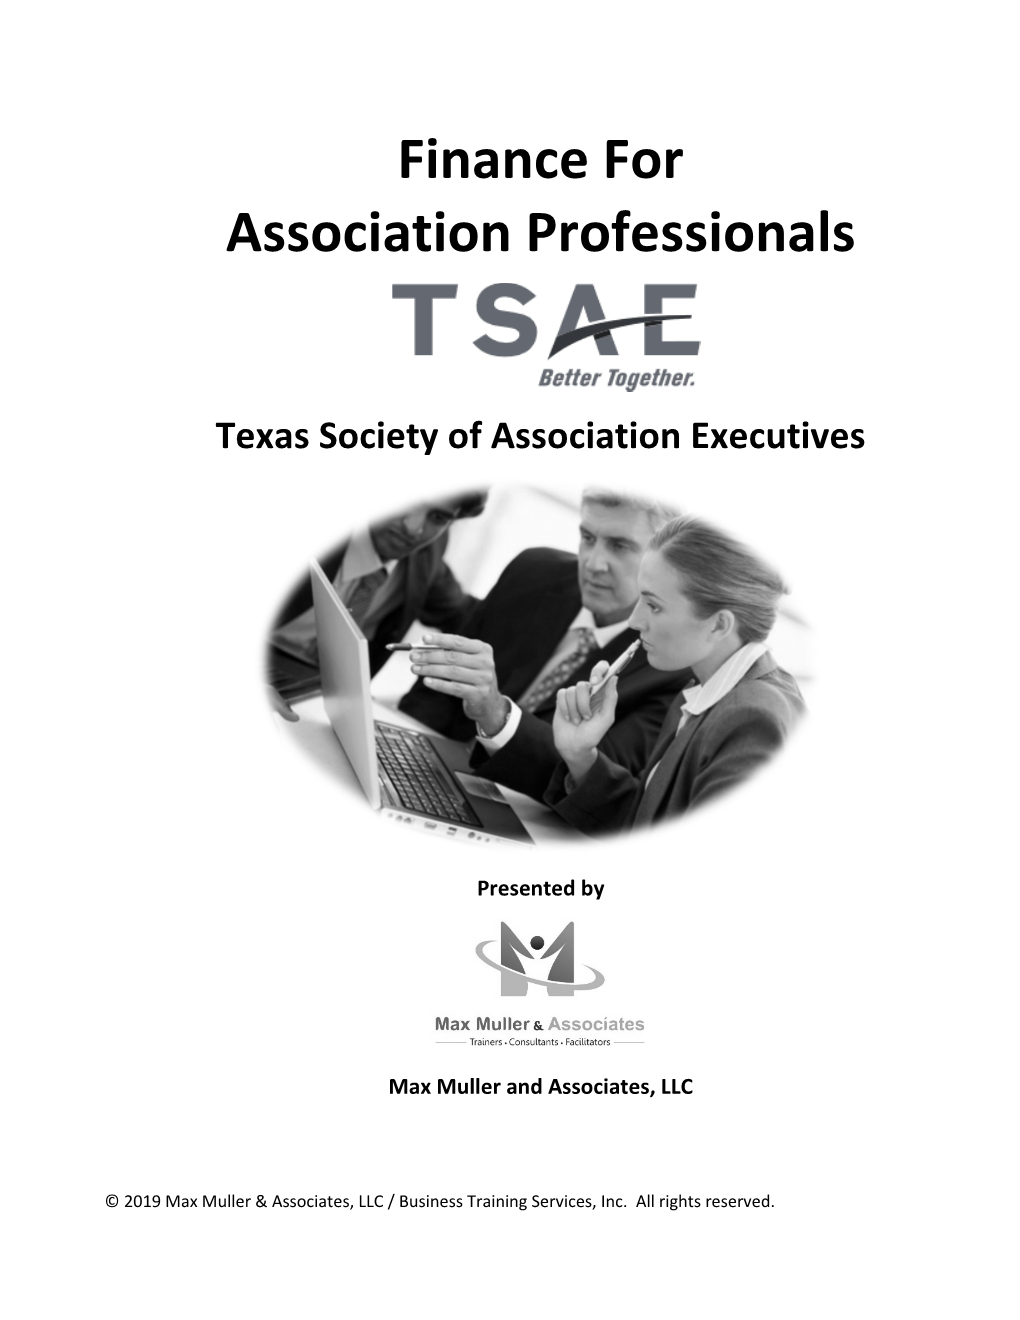 Finance for Association Professionals